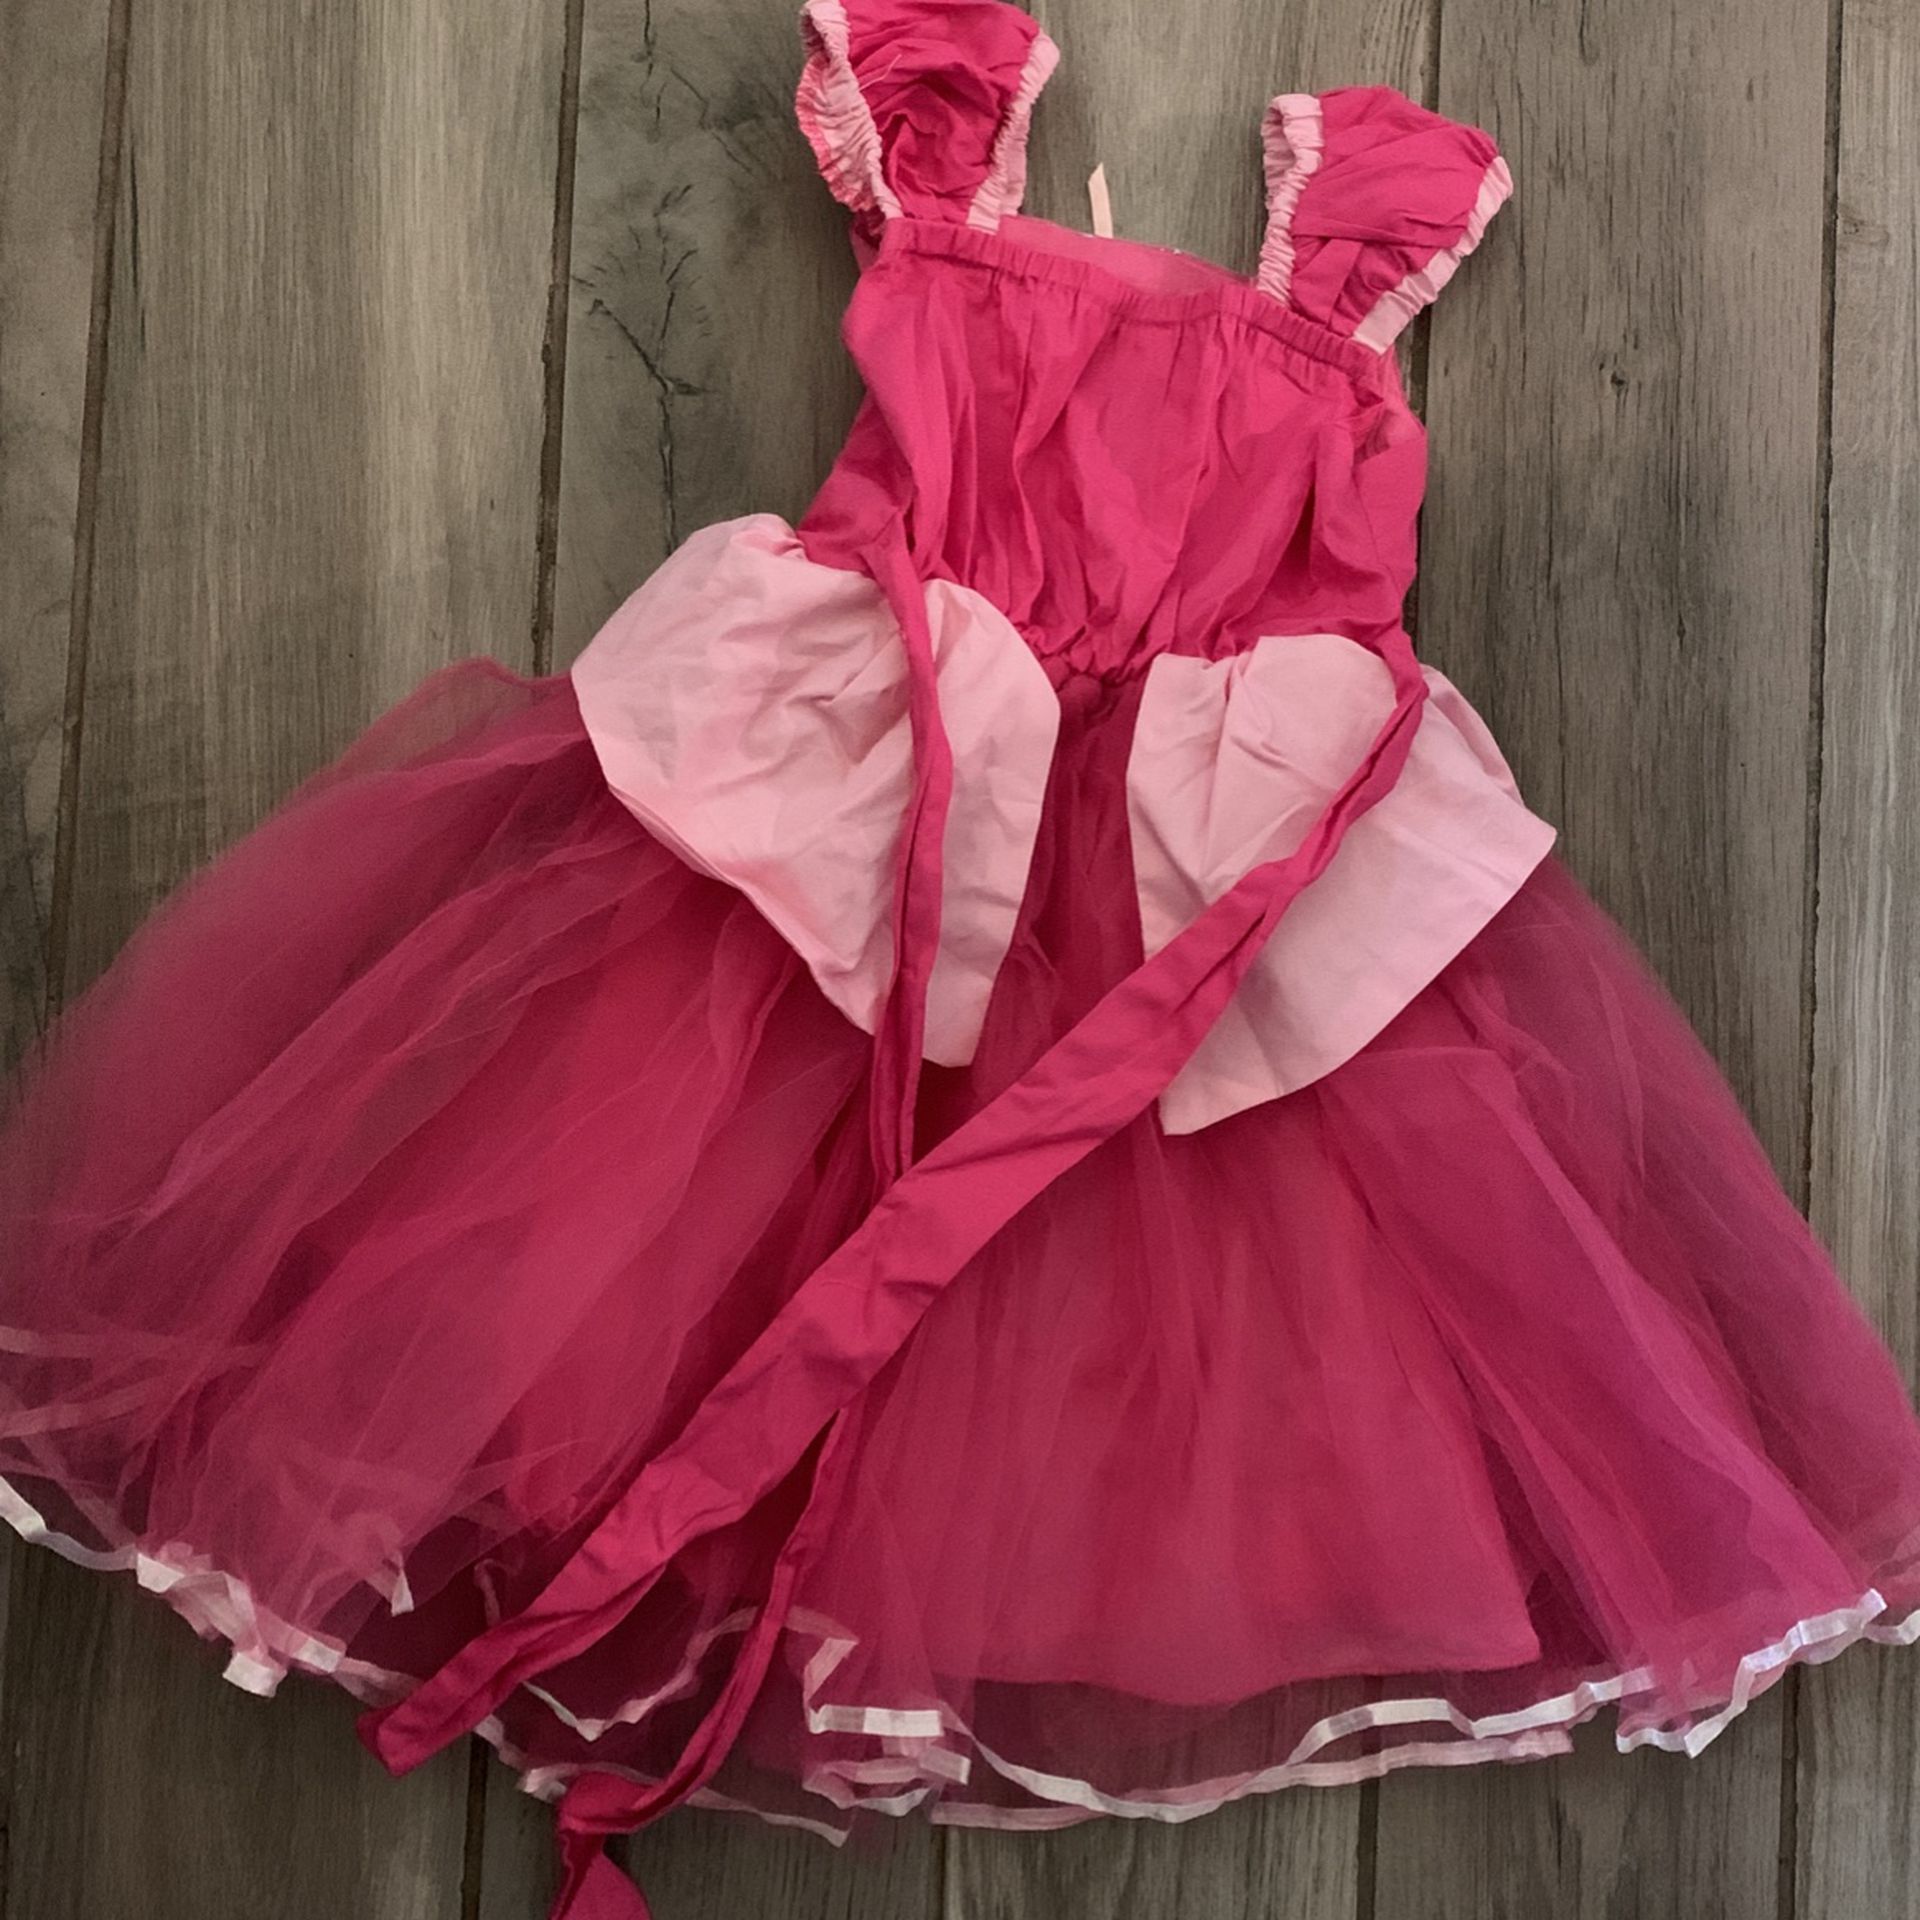 Princess Costume Dress Size 4/5T NEW